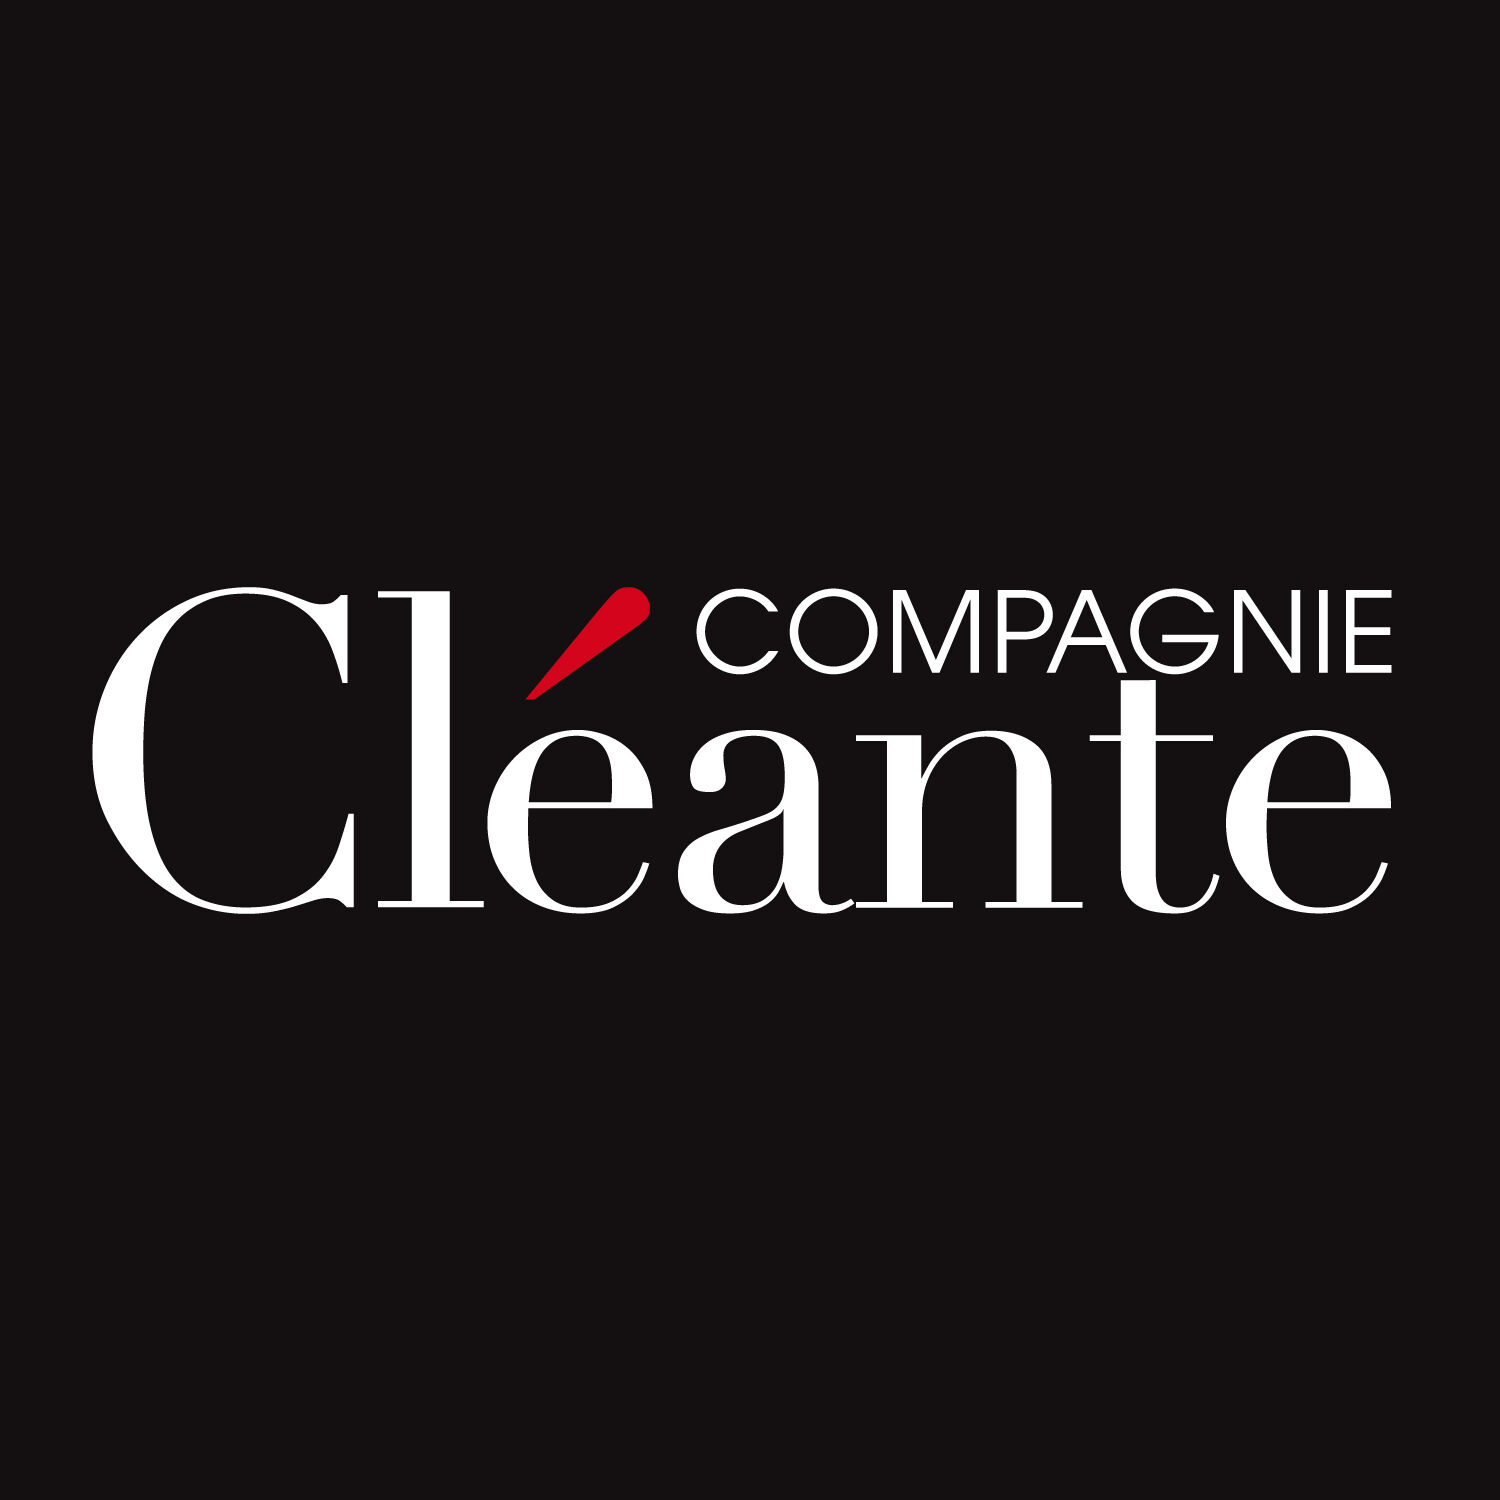 (c) Compagnie-cleante.com